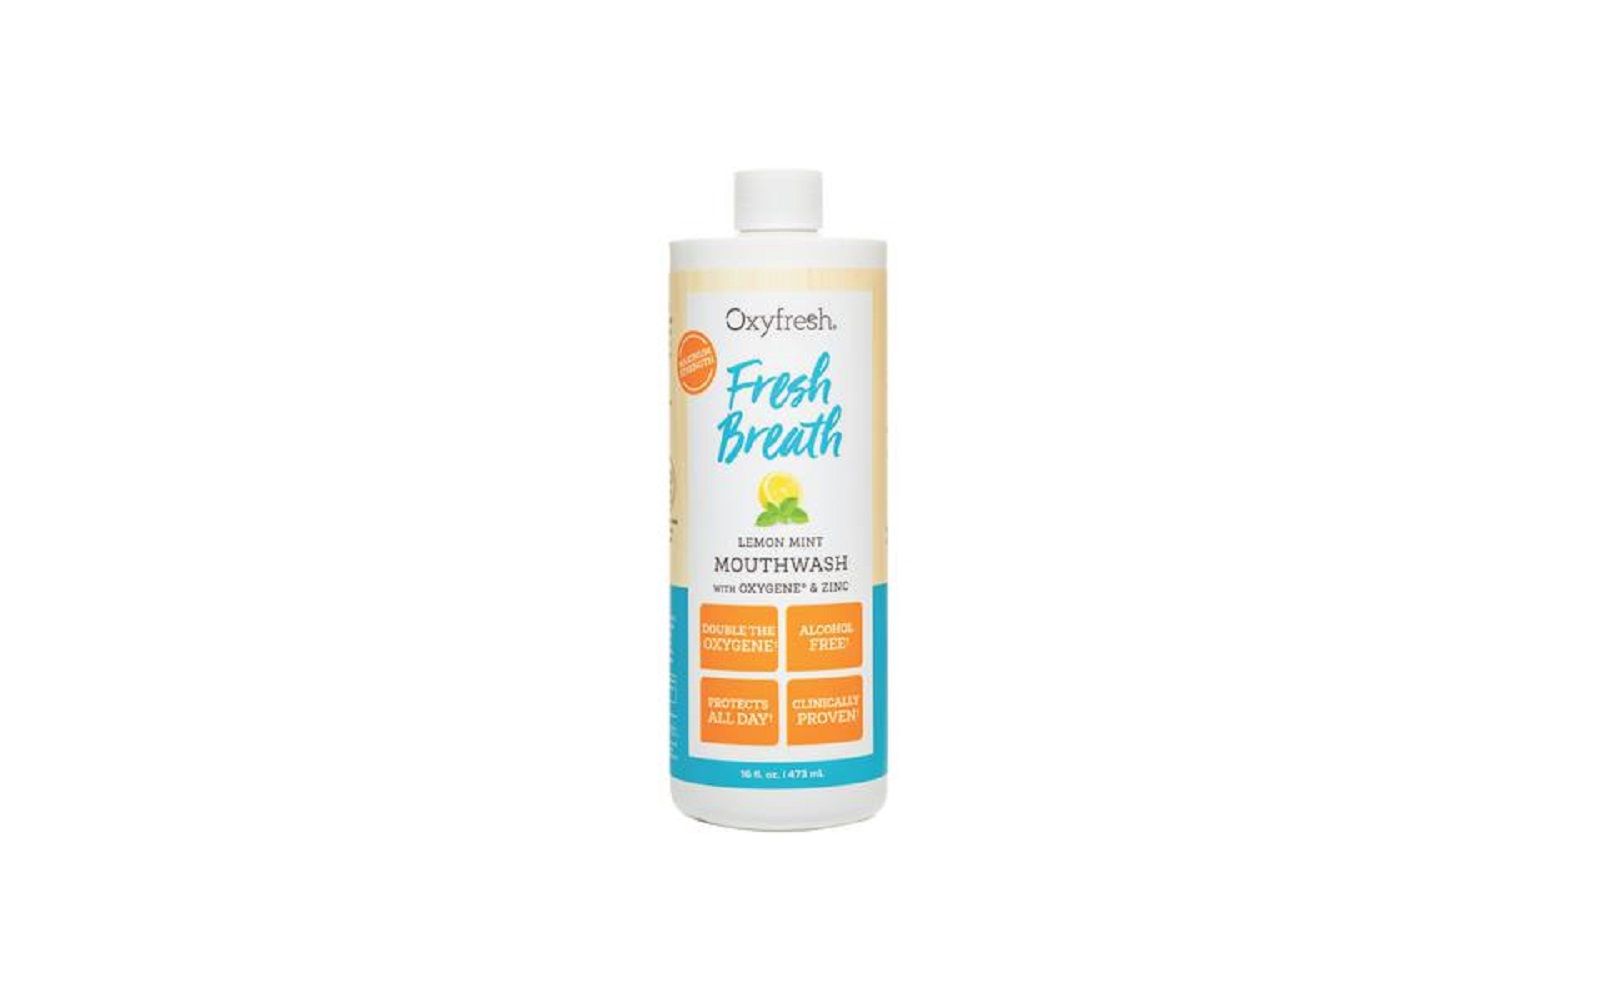 Fresh breath lemon mint mouthwash - oxyfresh worldwide inc